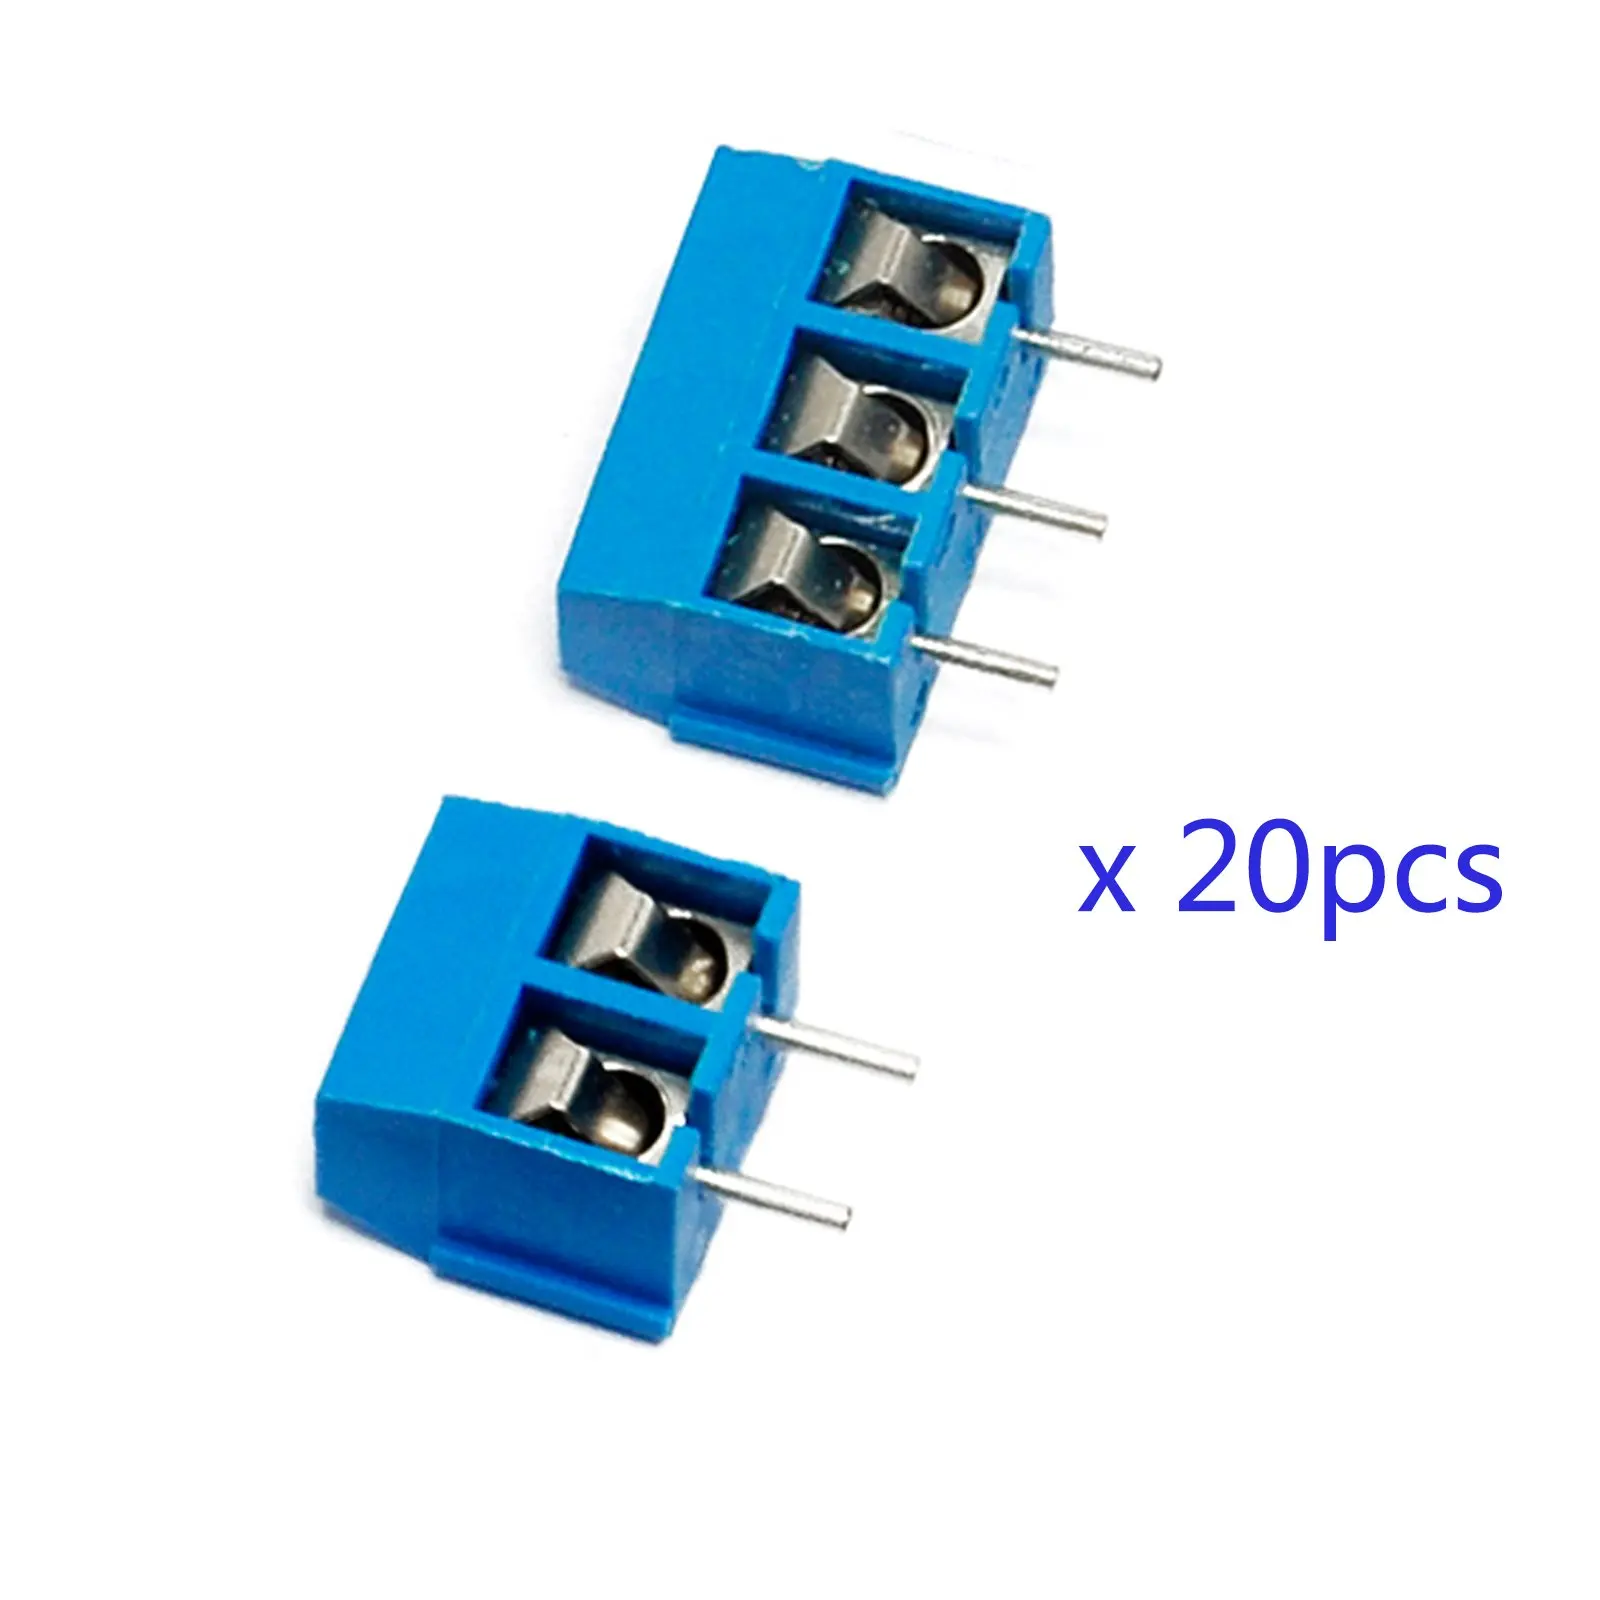 Gikfun 5.08-301-2P 2 Pin Screw Terminal Block Connector 5mm Pitch for Arduino Pack of 20pcs EK1601